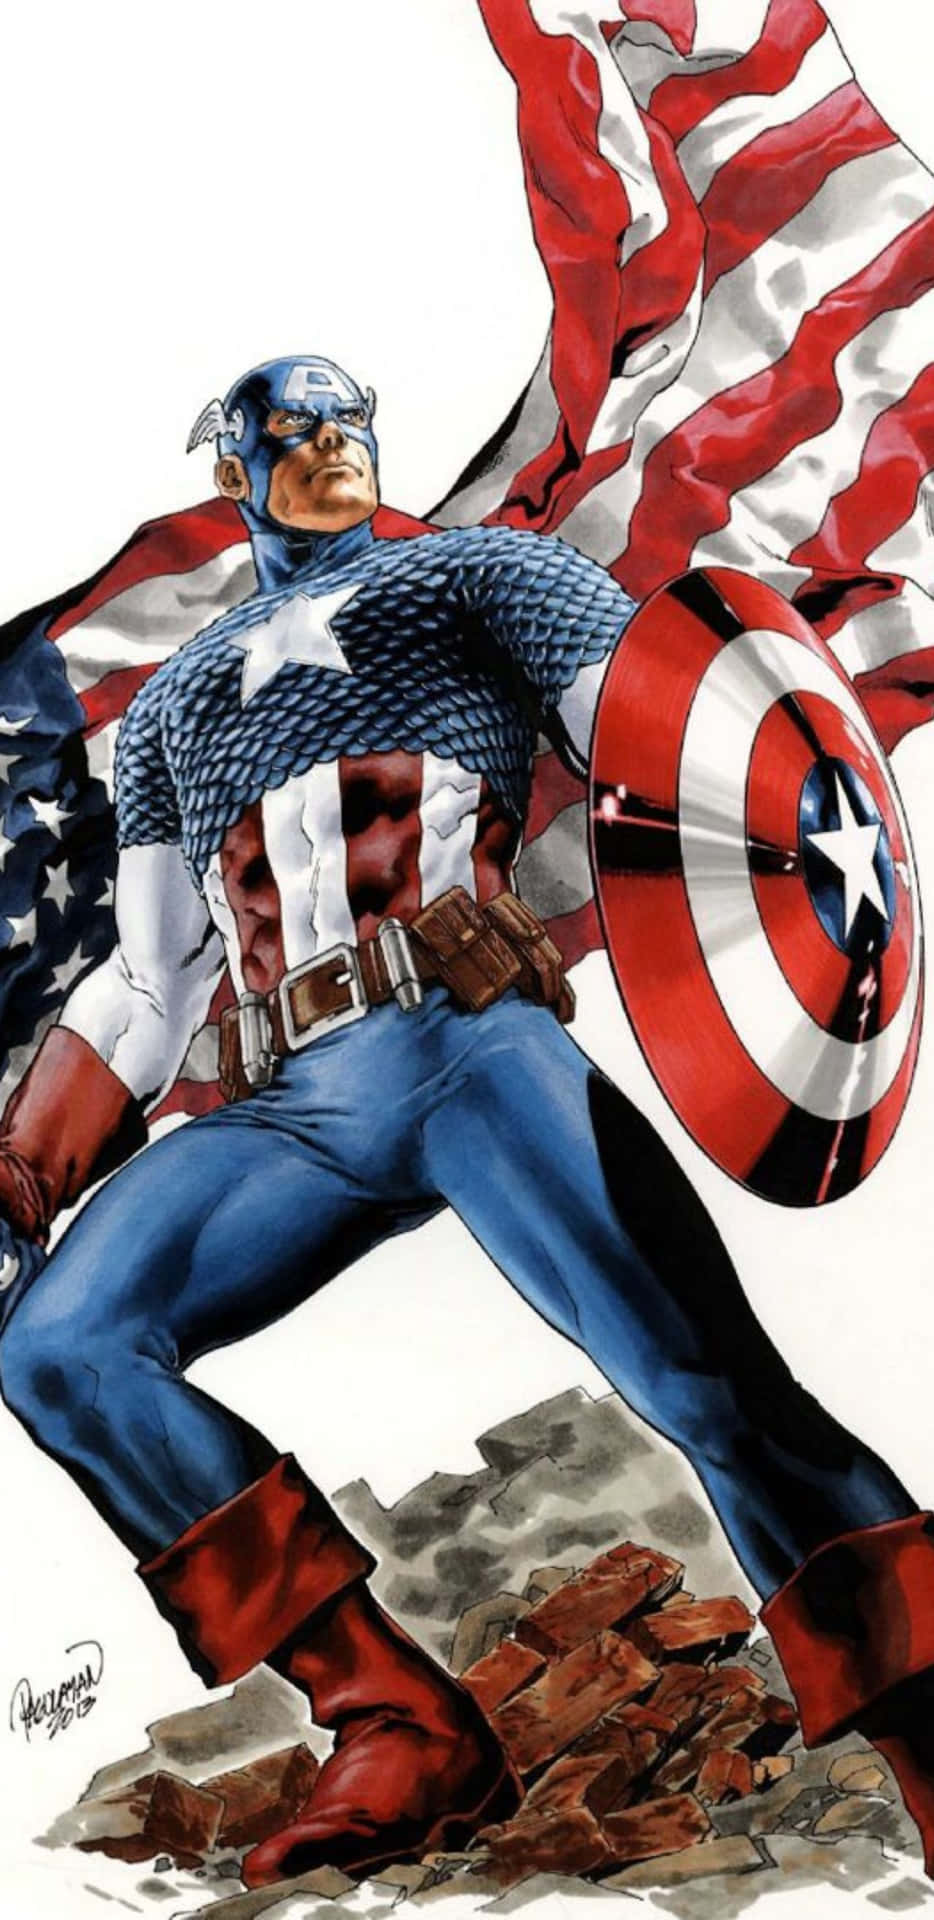 Pixel3xl Captain America Bakgrundsbild Comic.